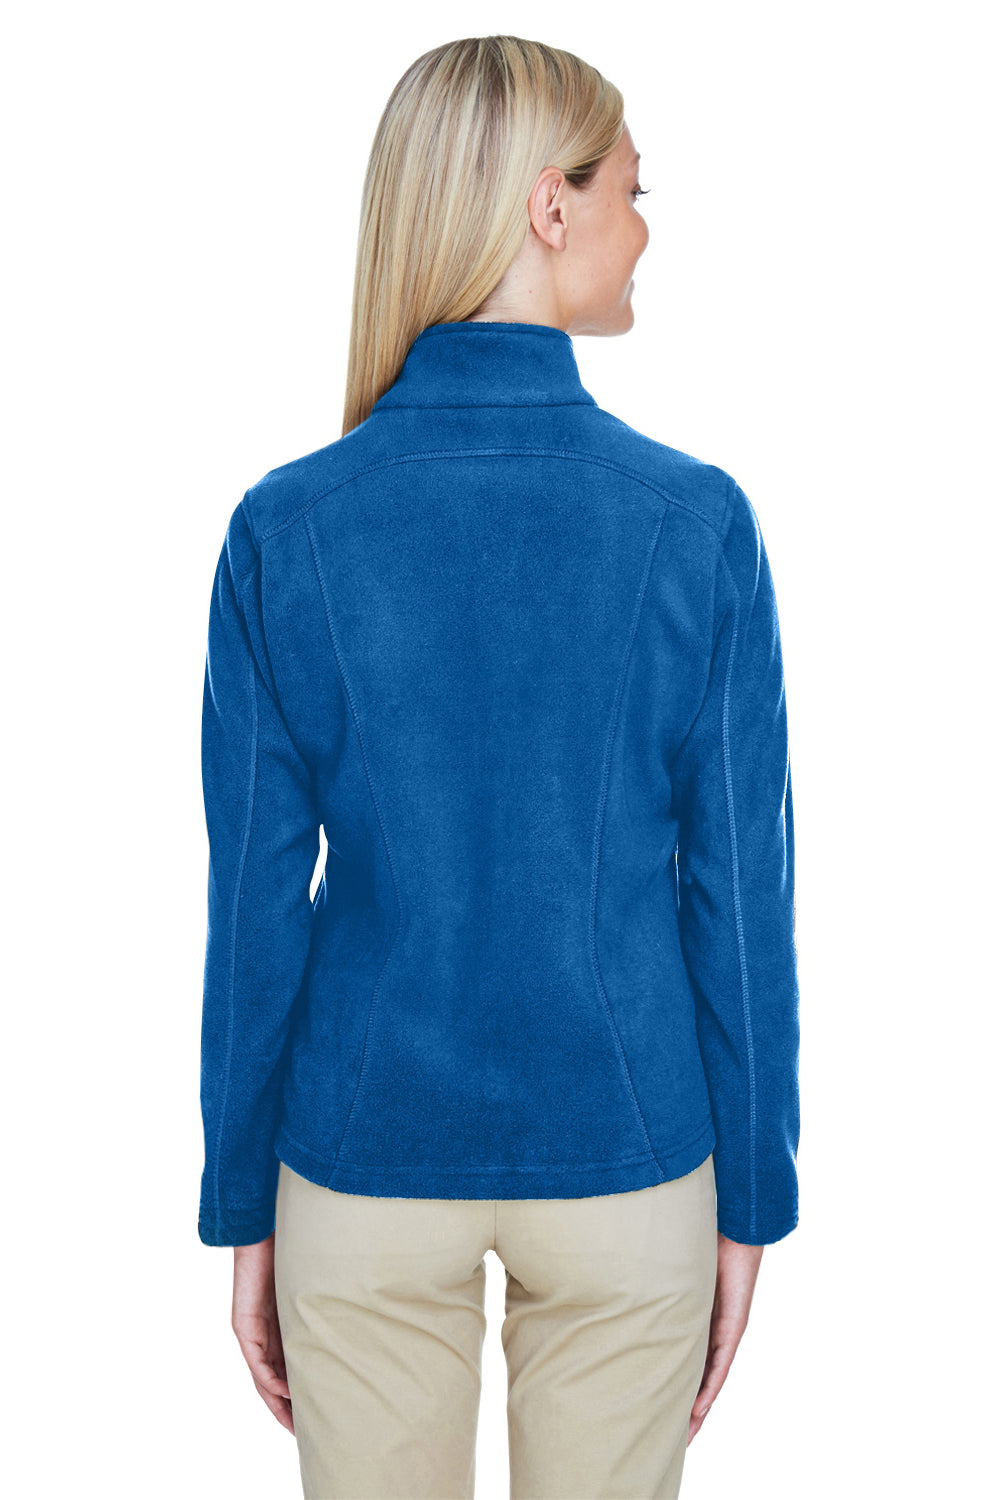 North End 78172 Womens Voyage Full Zip Fleece Jacket Royal Blue Back